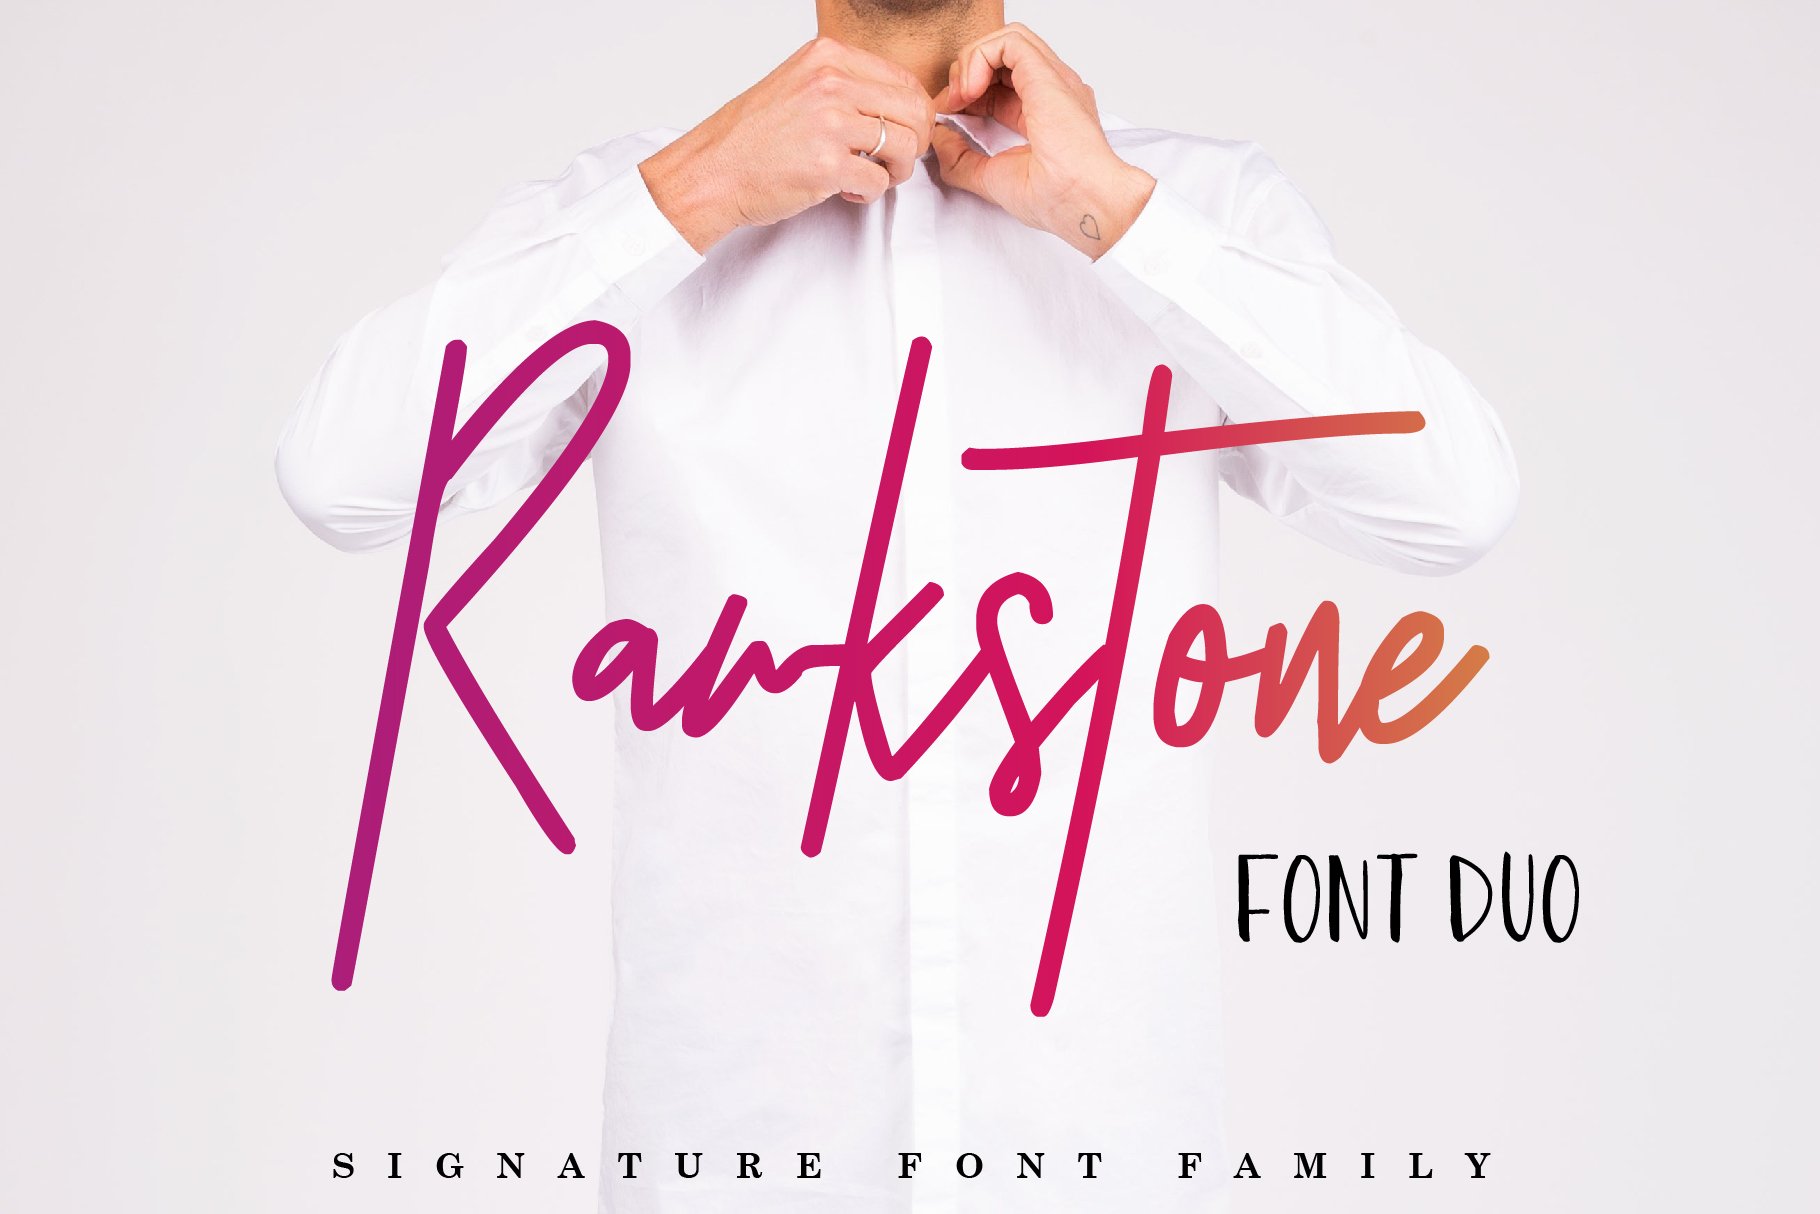 大气的手写签名英文字体 Rawkstone Font Duo